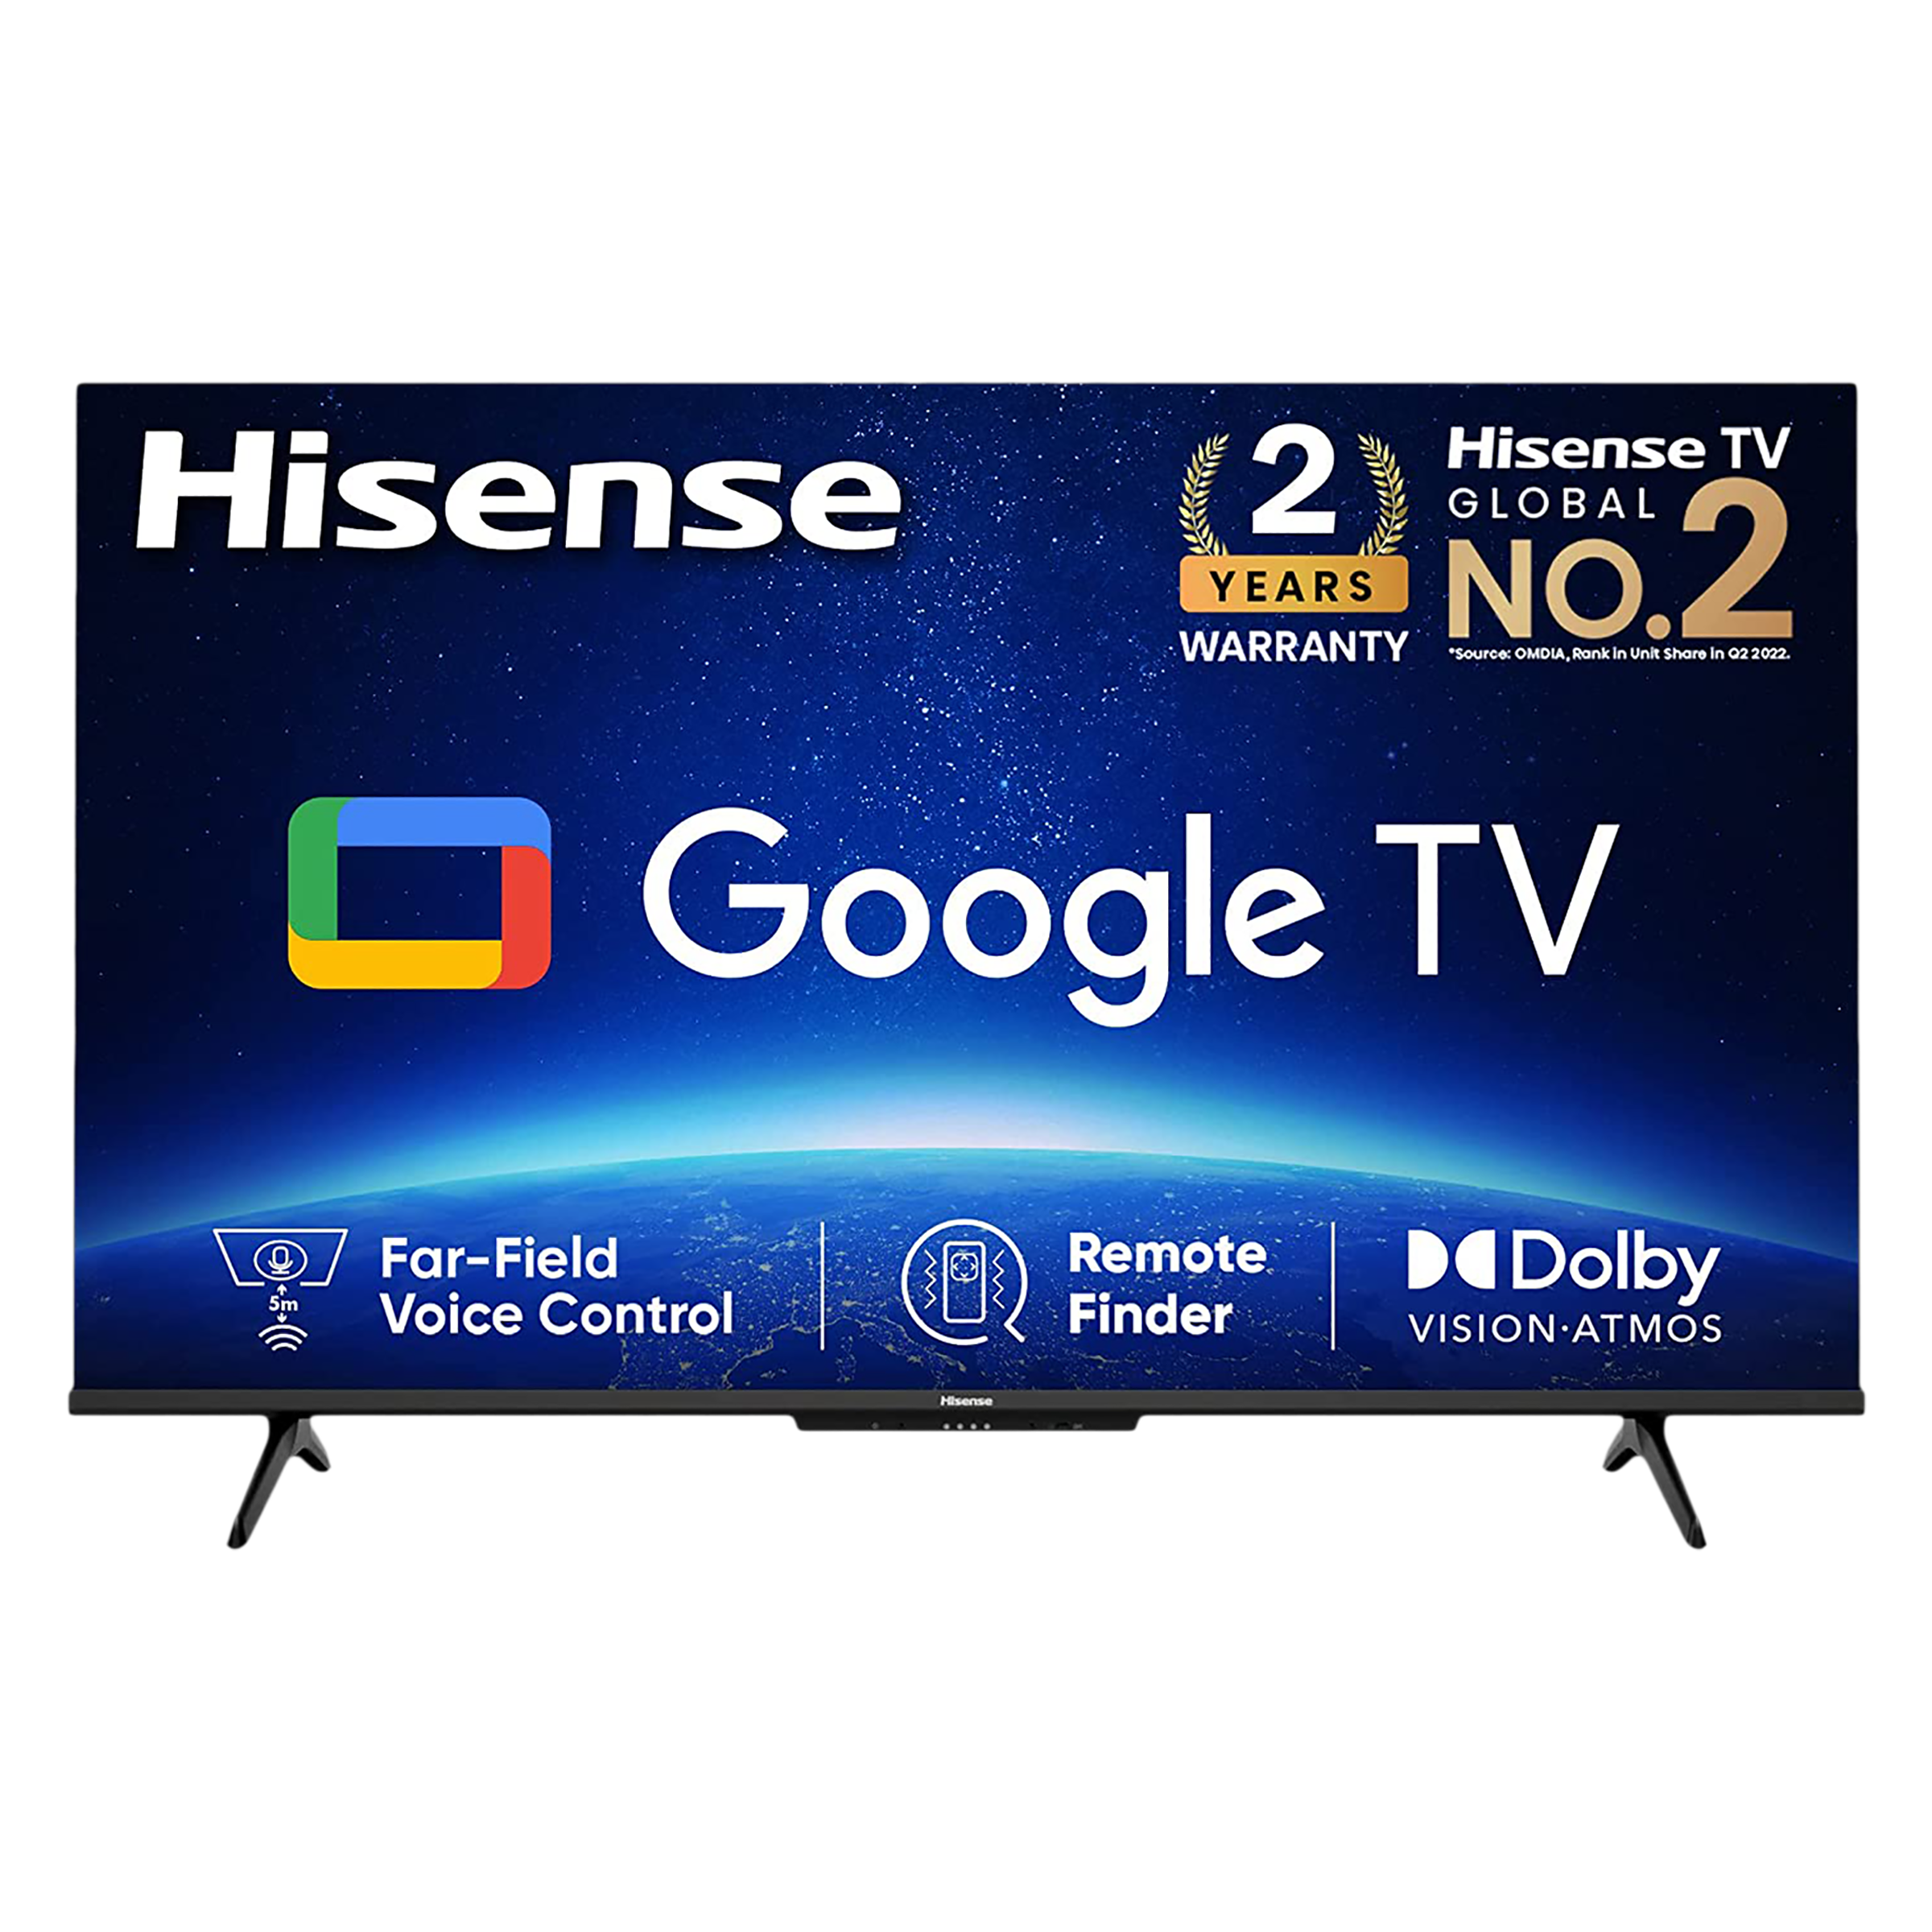 Hisense Bezelless 139 cm (55 inch) LED 4K Ultra HD Google TV with Dolby Vision (2022 model)_1